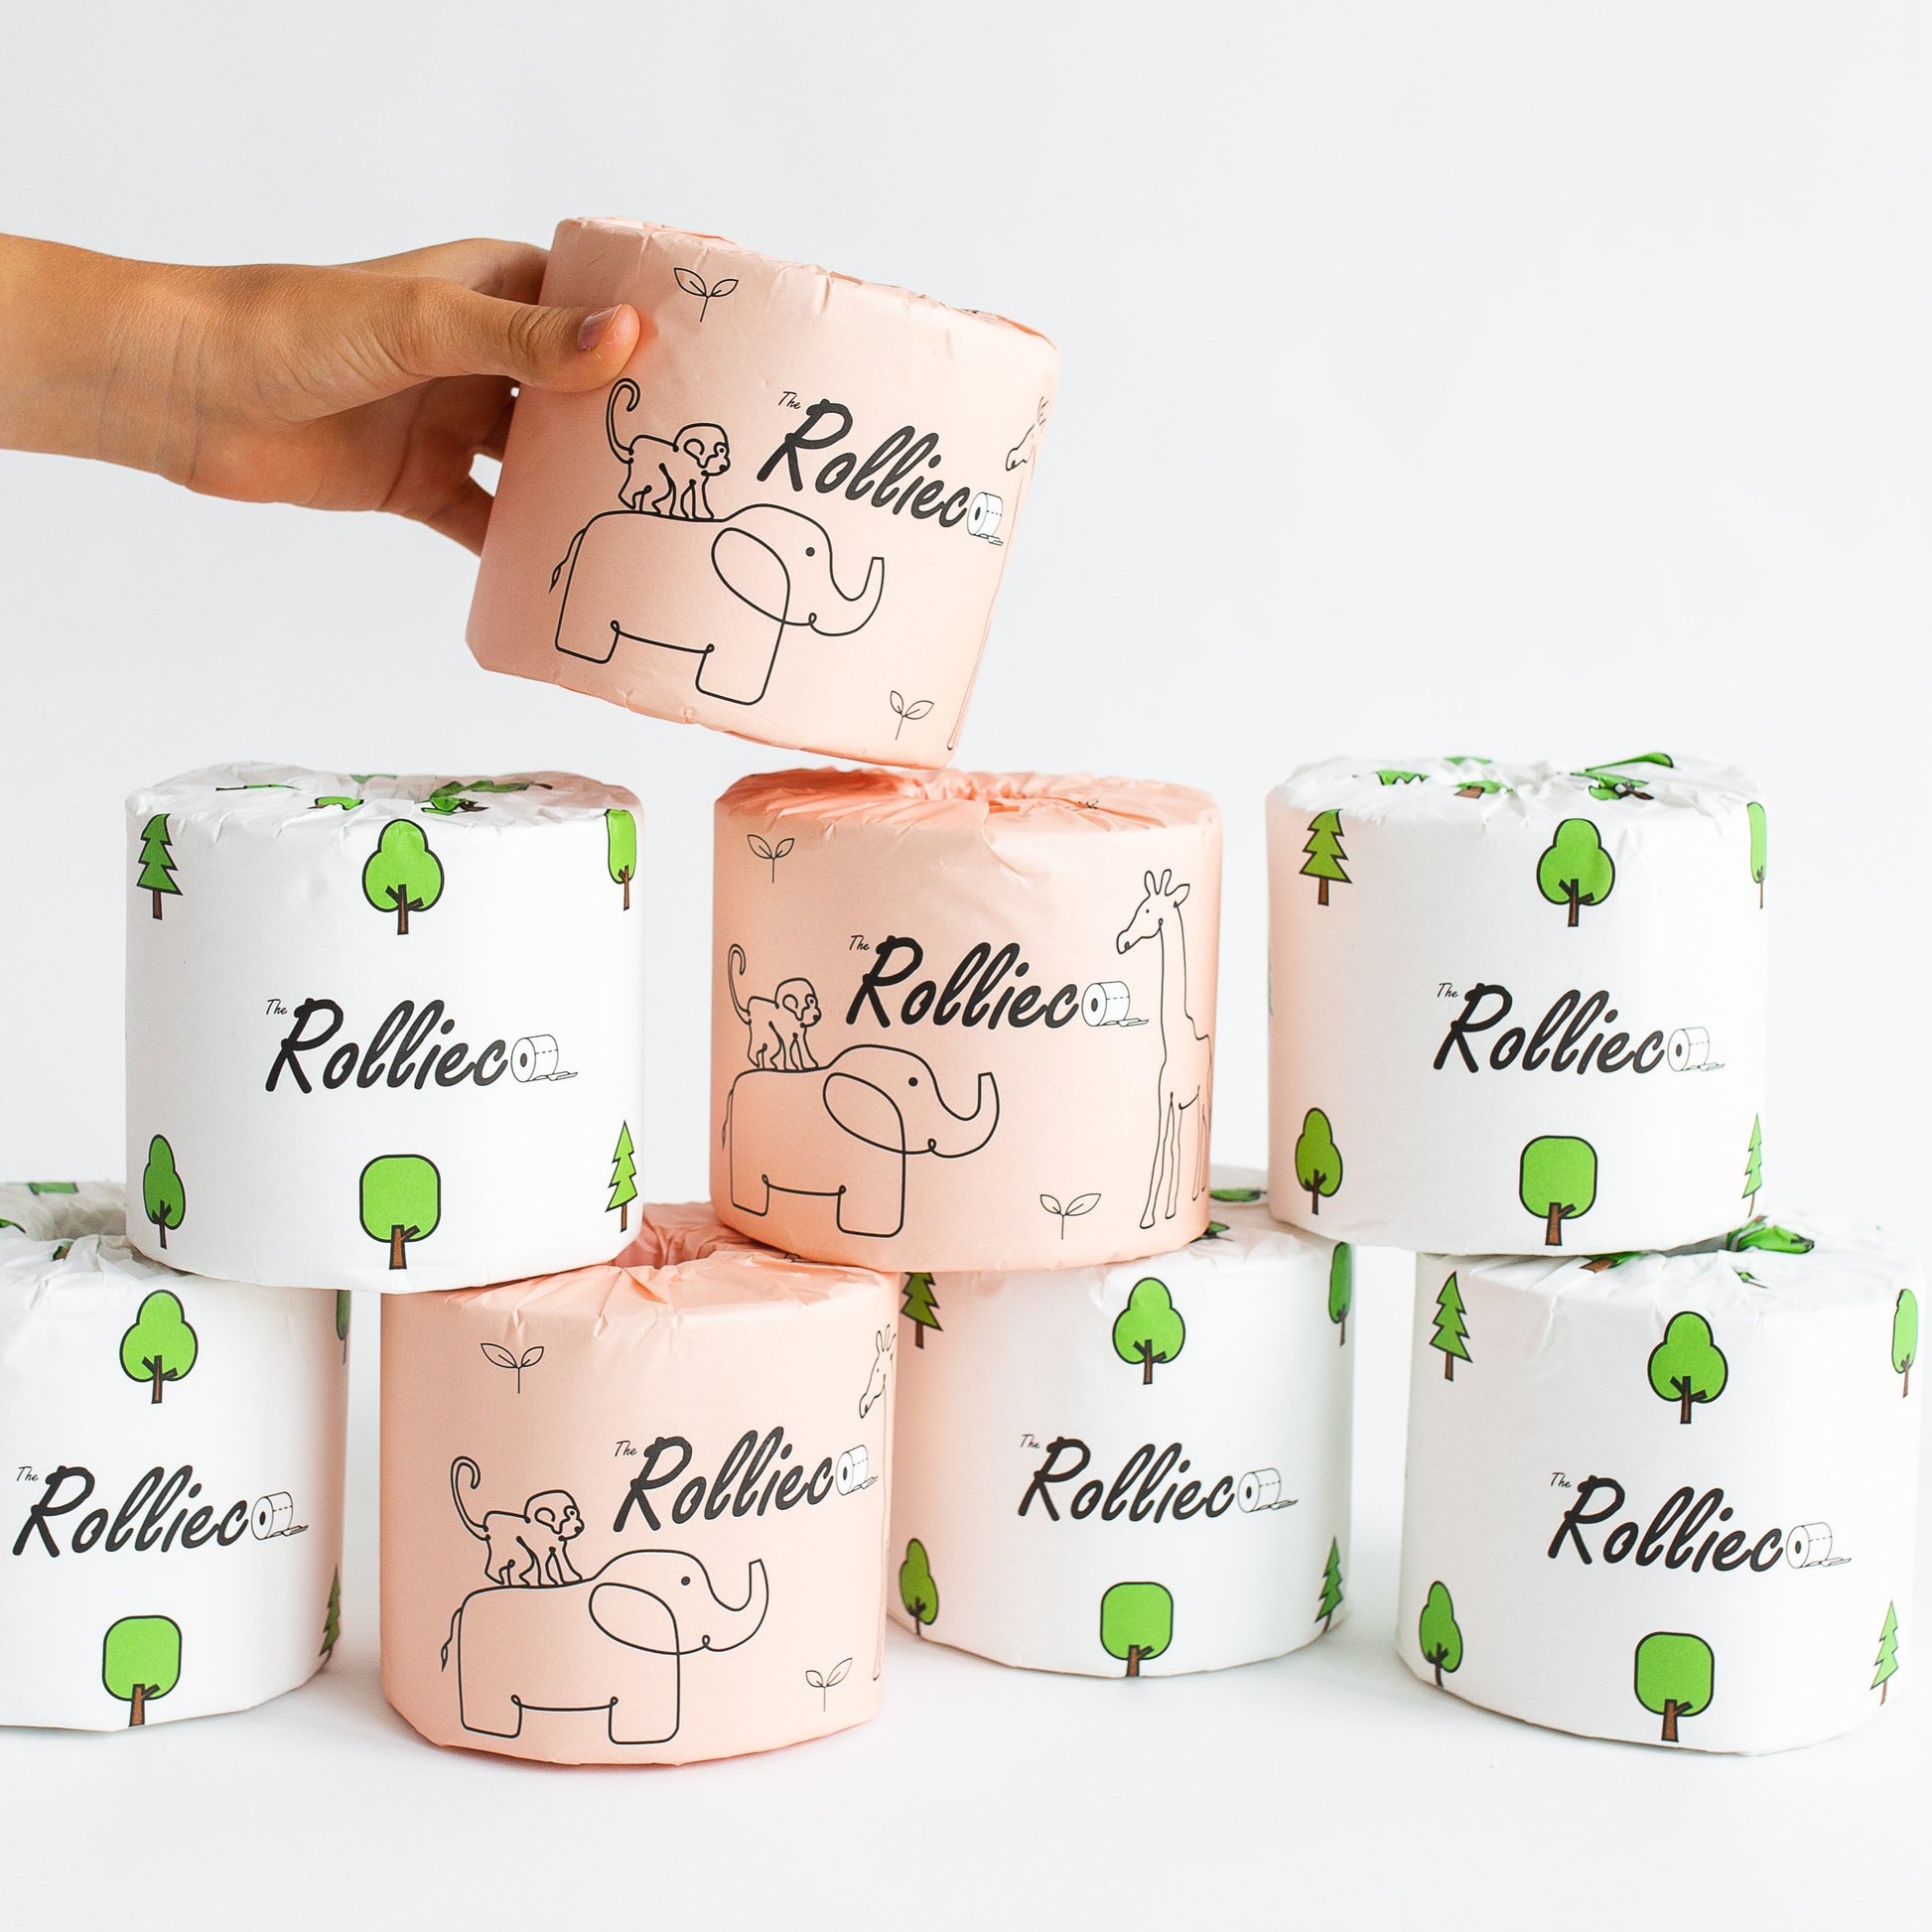 Eco-friendly Plastic Free Toilet Paper Rolls Singapore